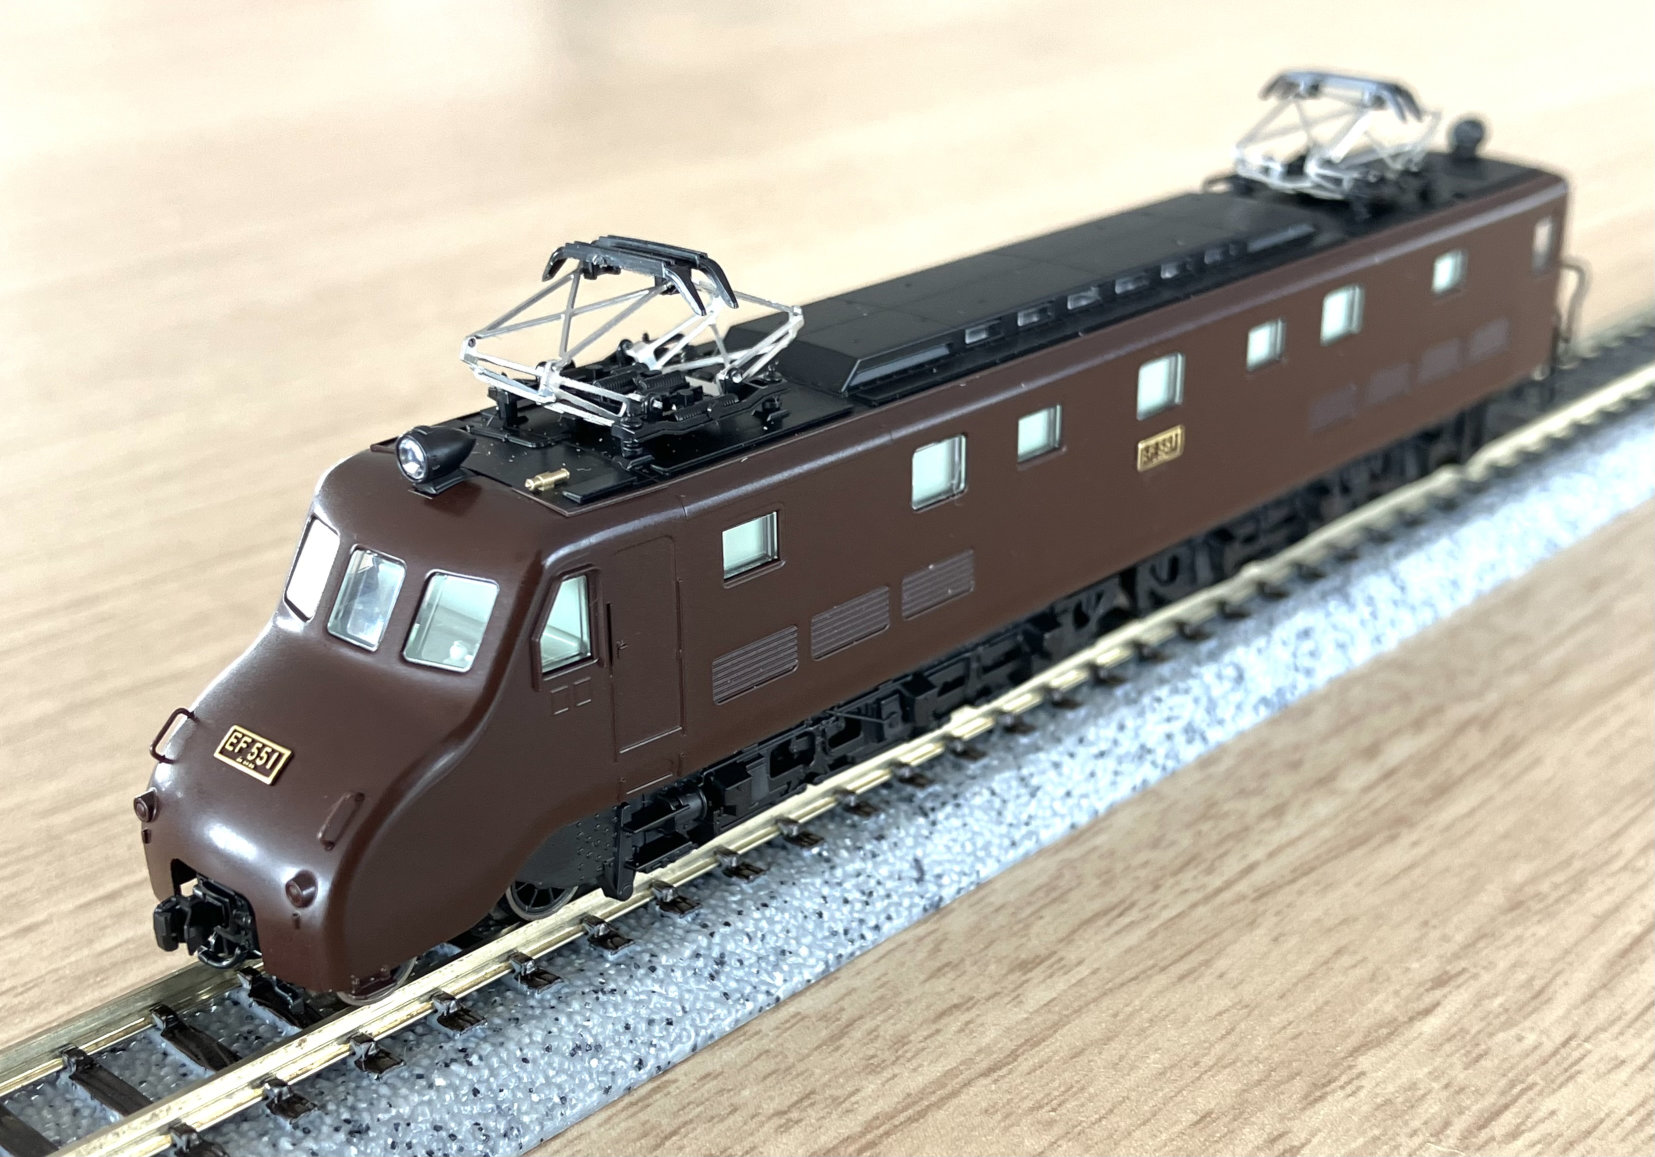 KATO 3095 EF55 高崎運転所 Nゲージ | 鉄道模型 通販 ホビーショップ